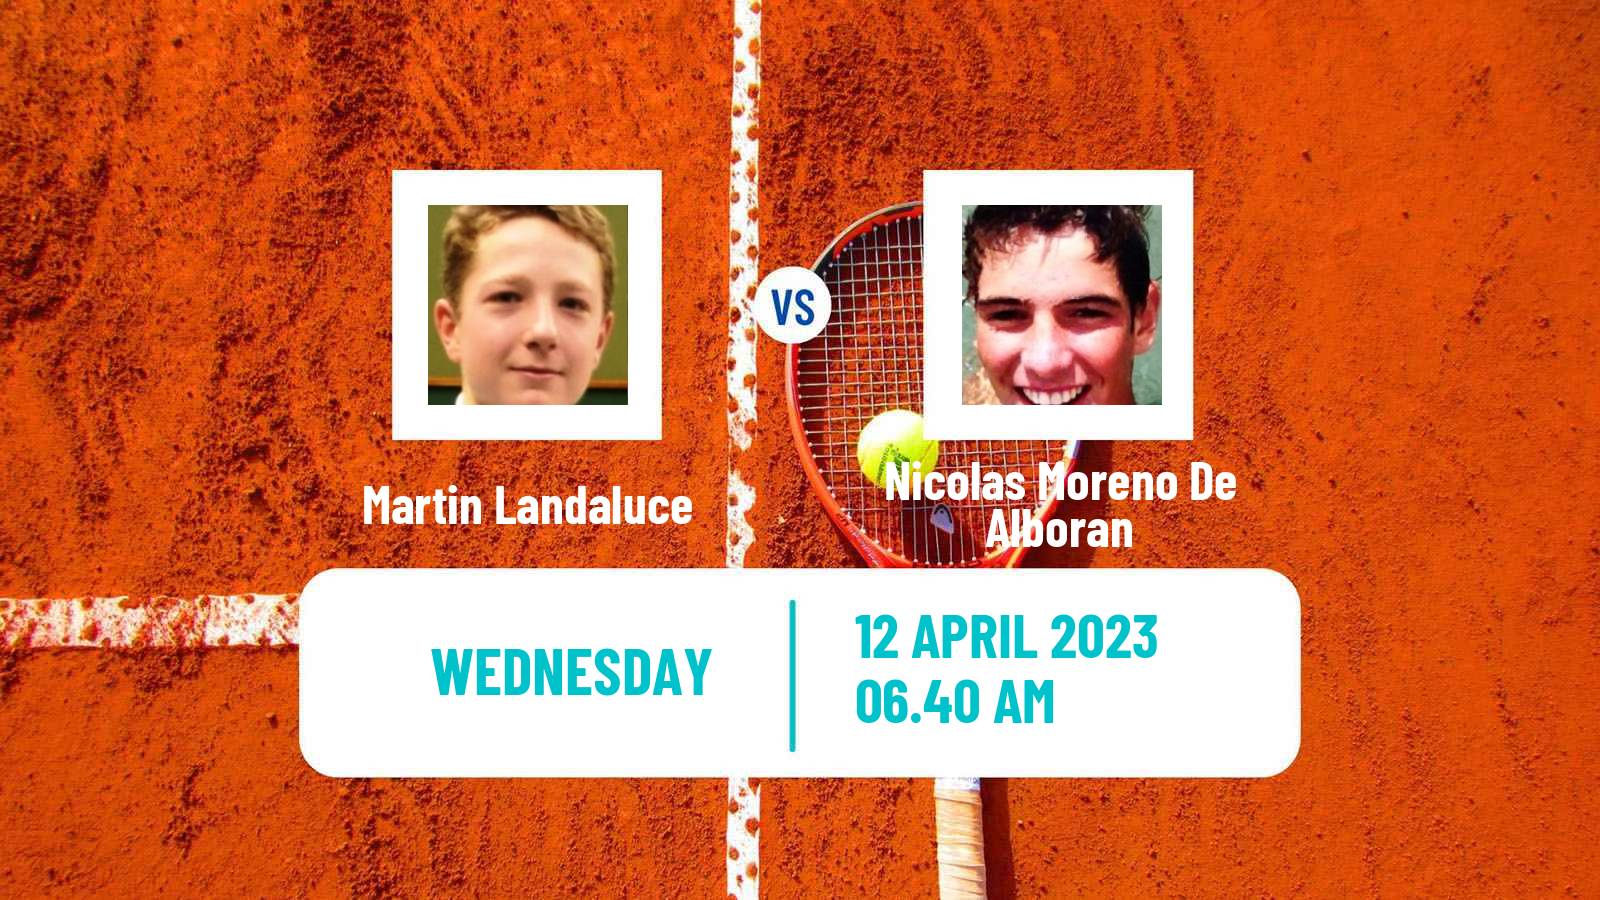 Tennis ATP Challenger Martin Landaluce - Nicolas Moreno De Alboran